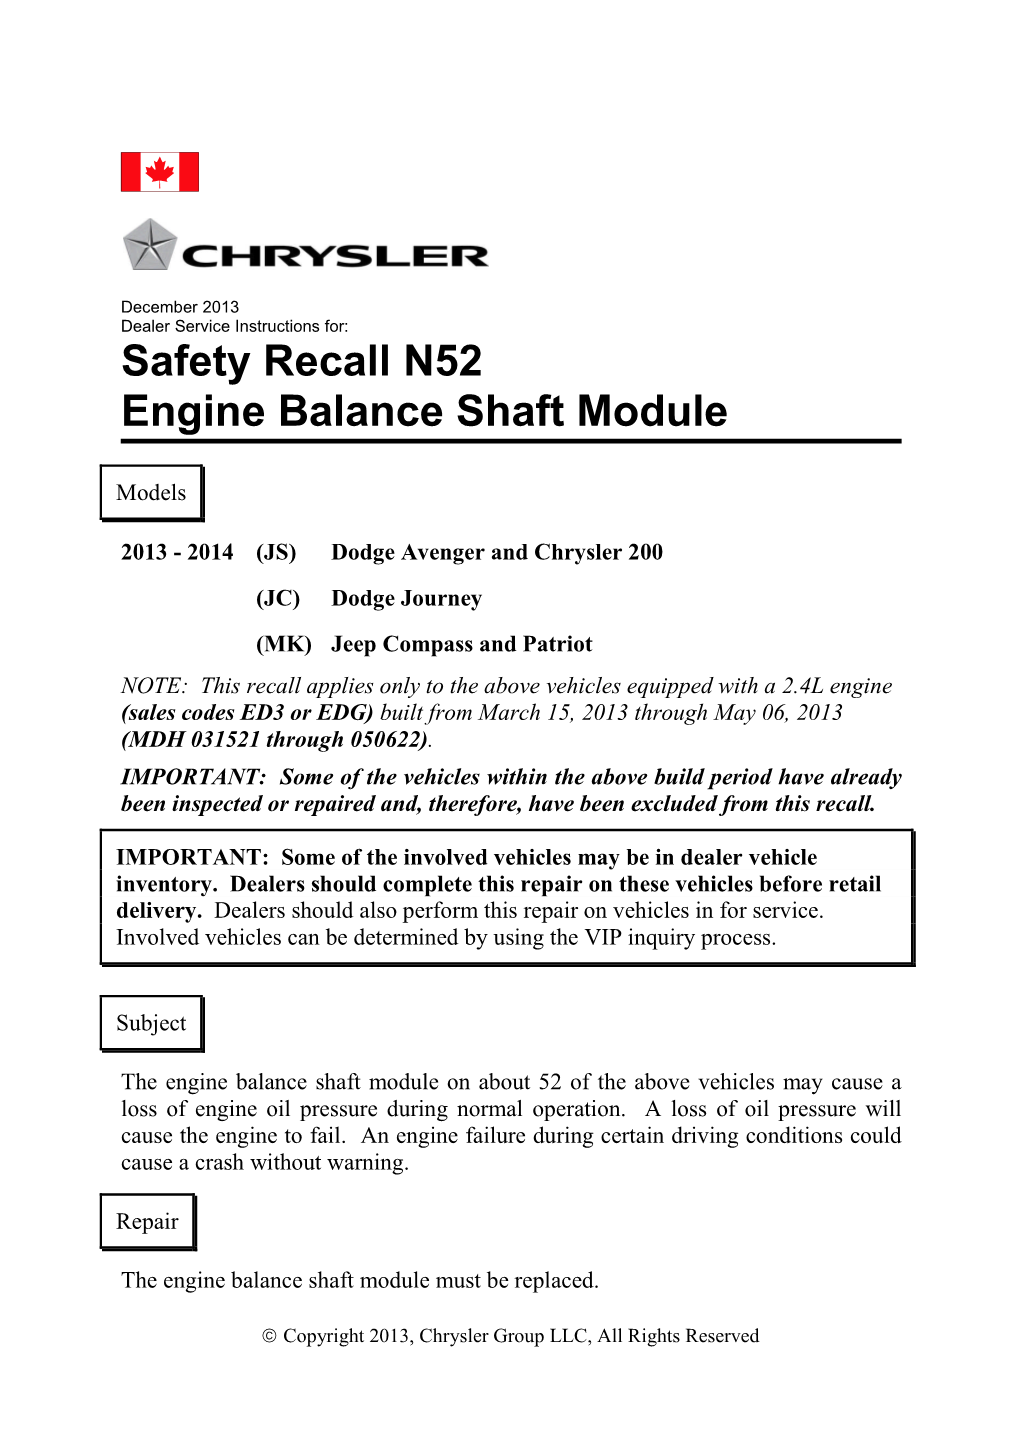 Safety Recall N52 Engine Balance Shaft Module